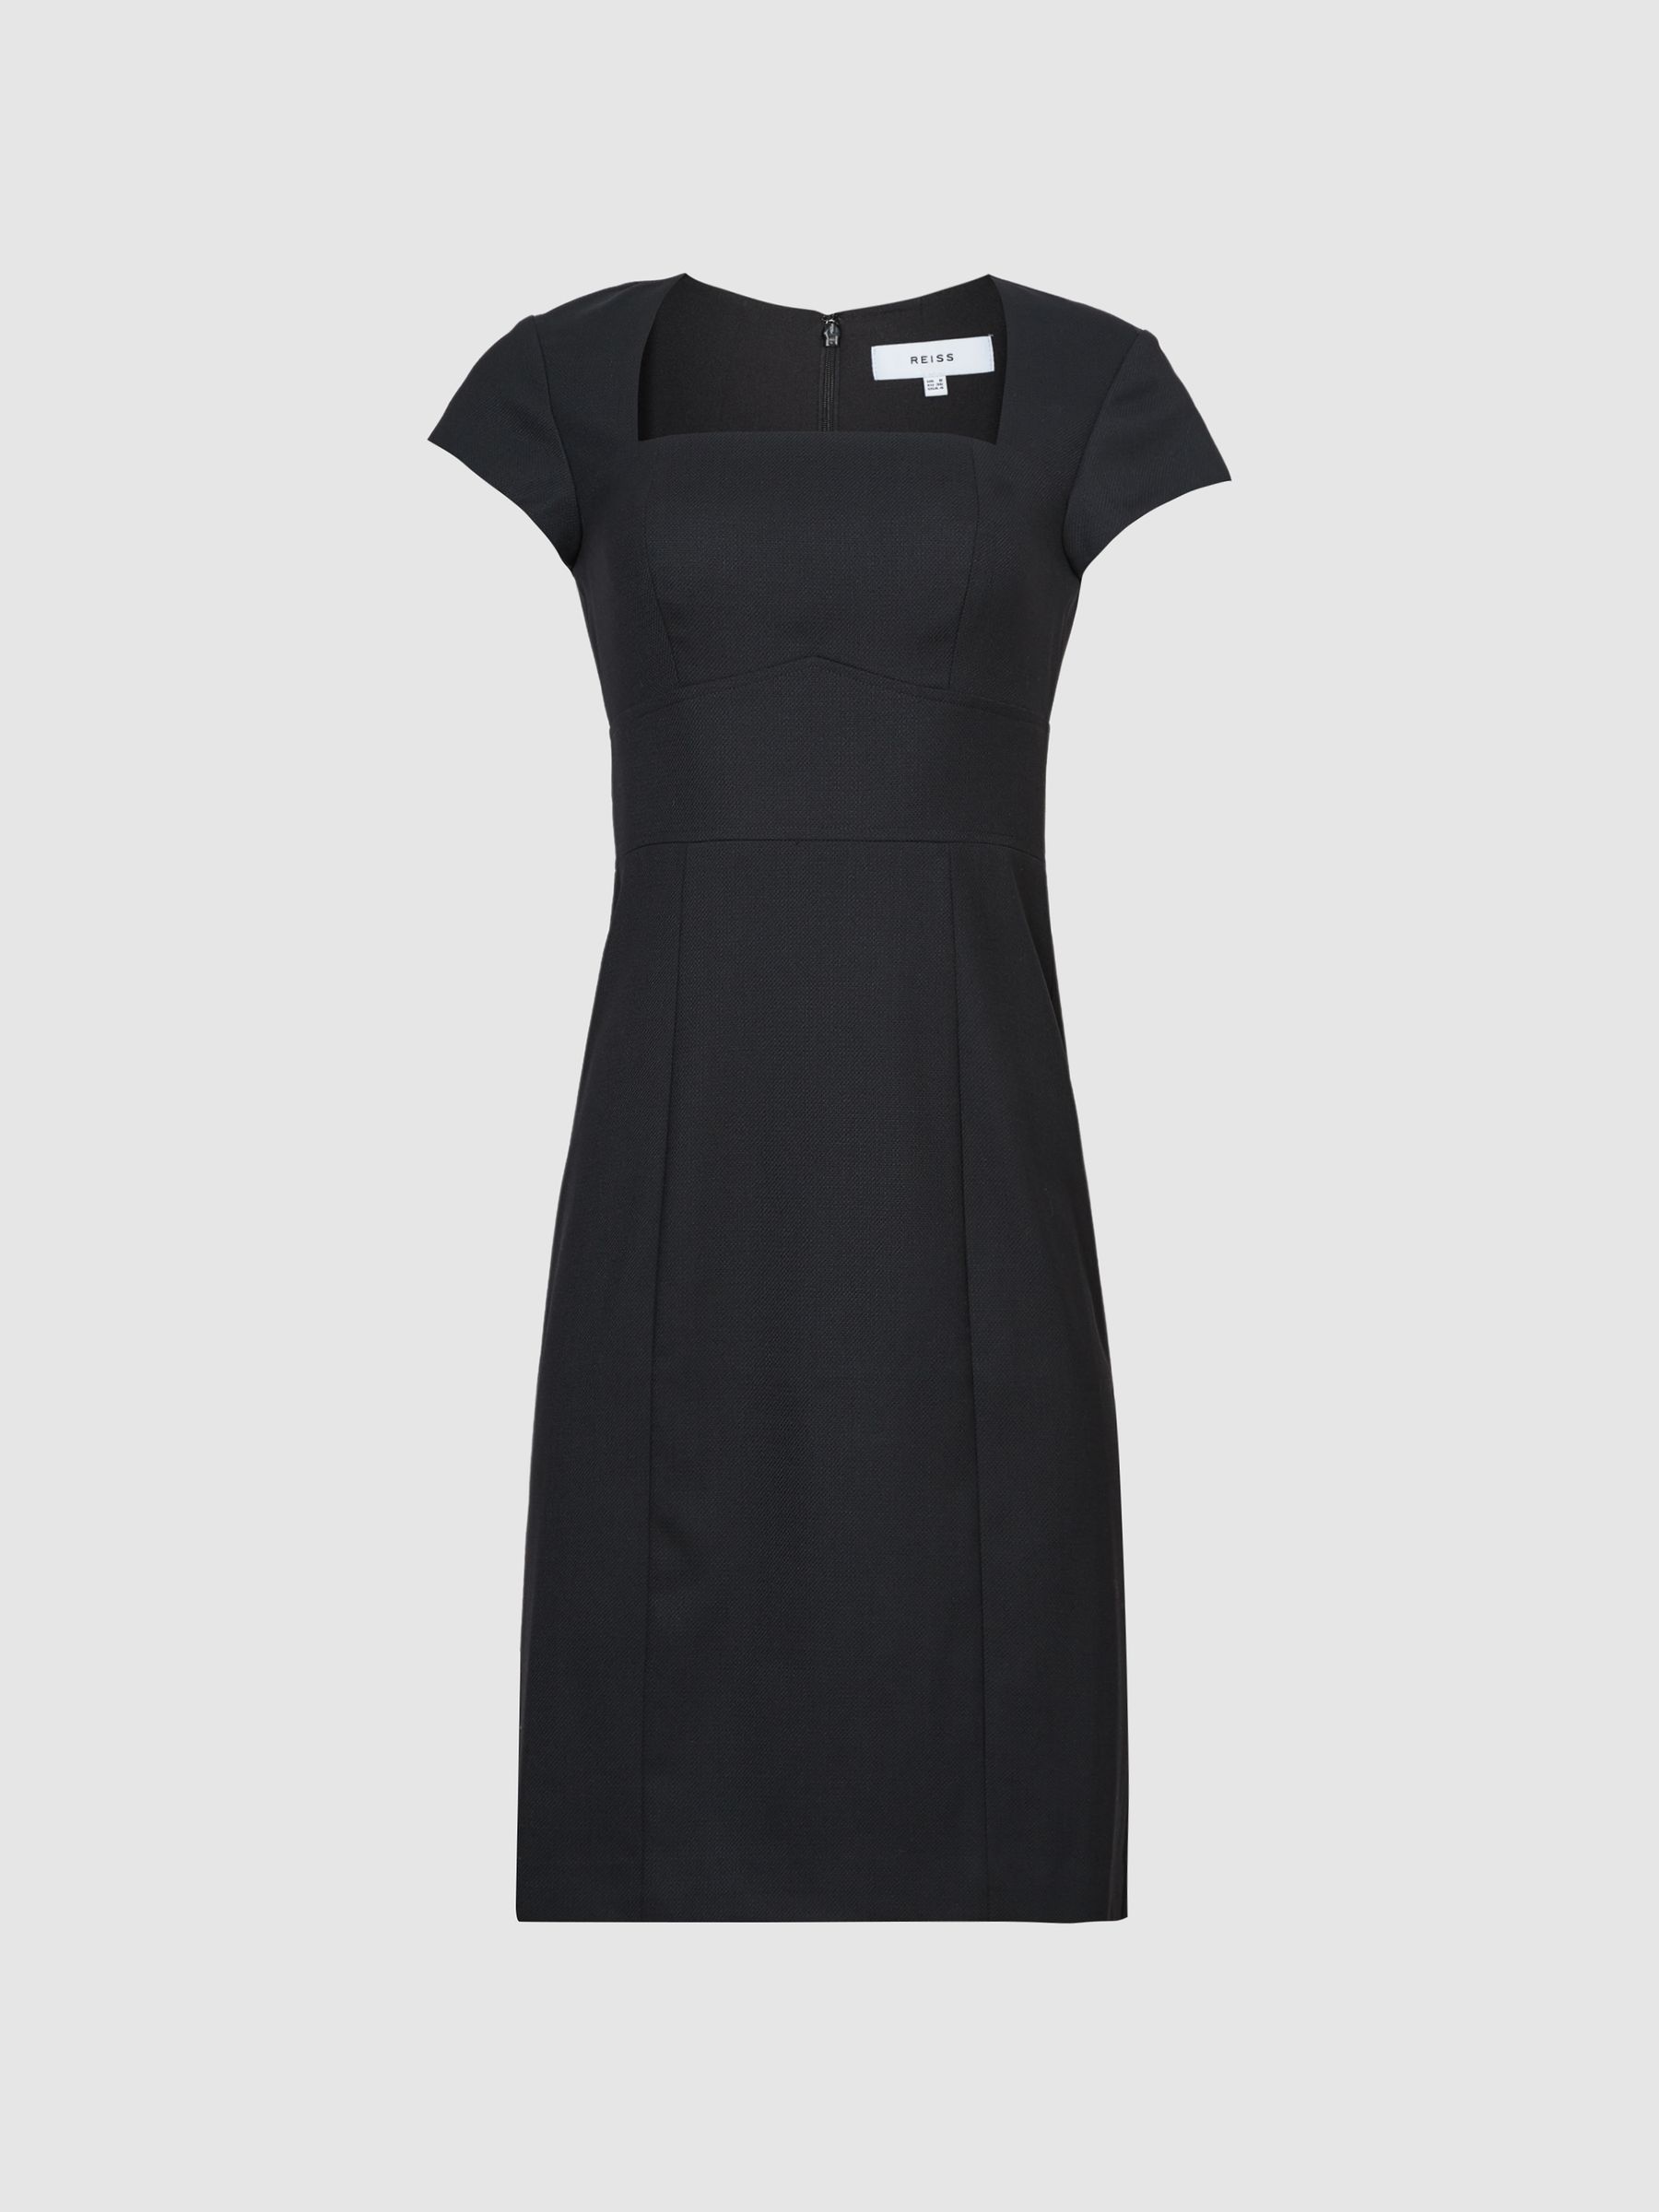 Petite Tailored Dress in Black - REISS